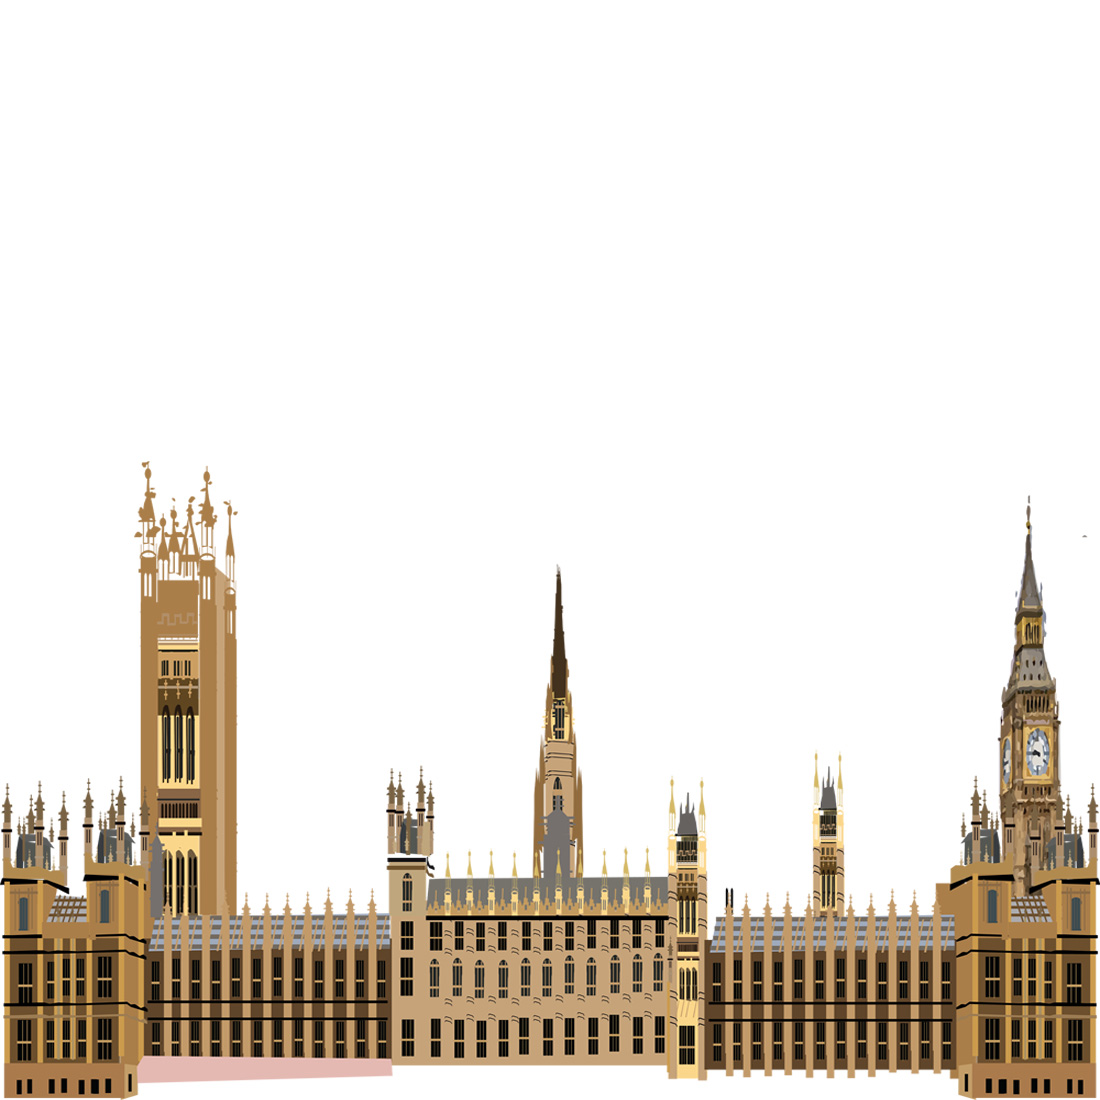 Parliament of England cover image.